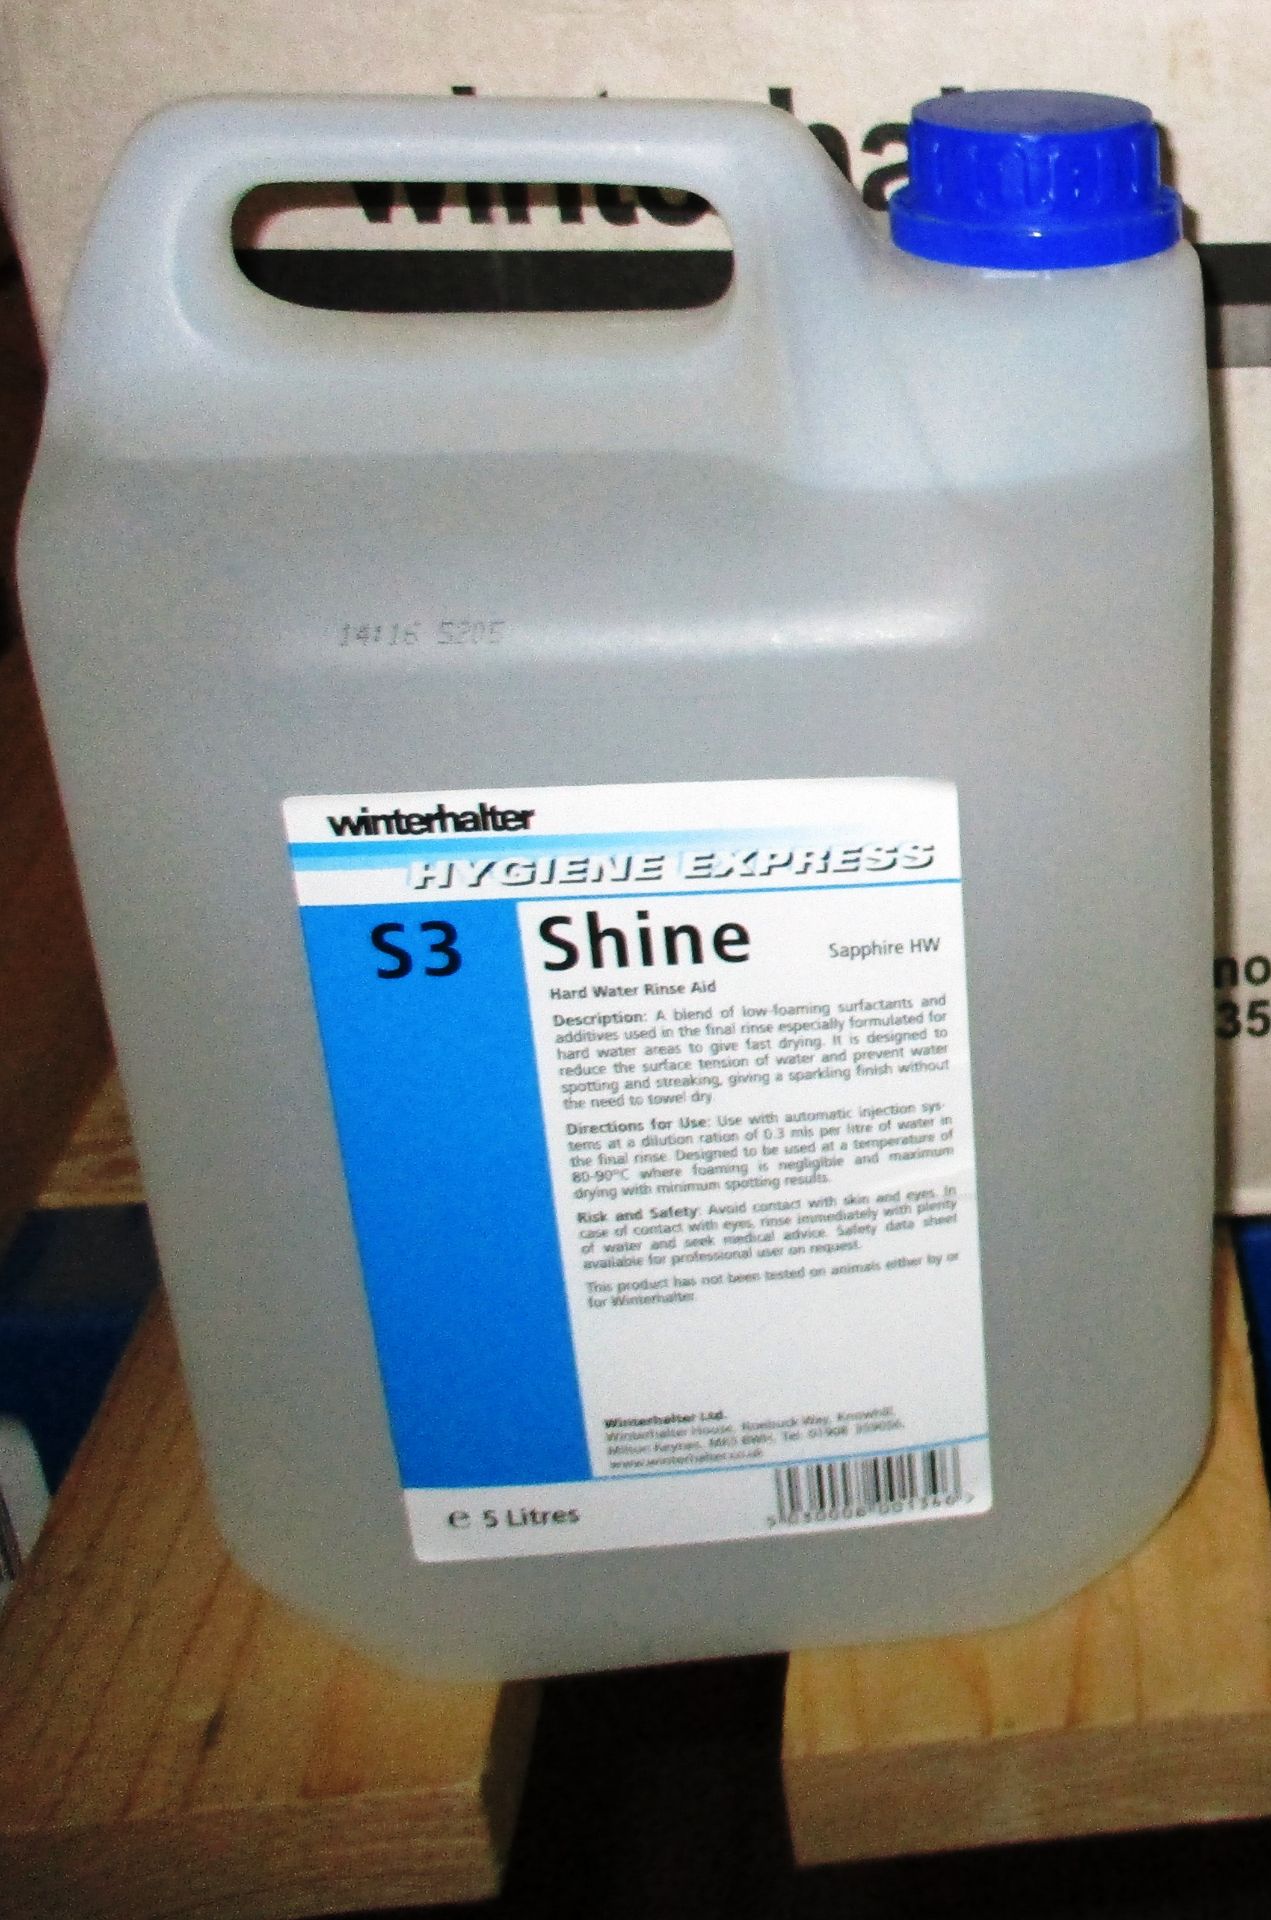 10 x 5 litre Winterhalter shine hard water rinse aid